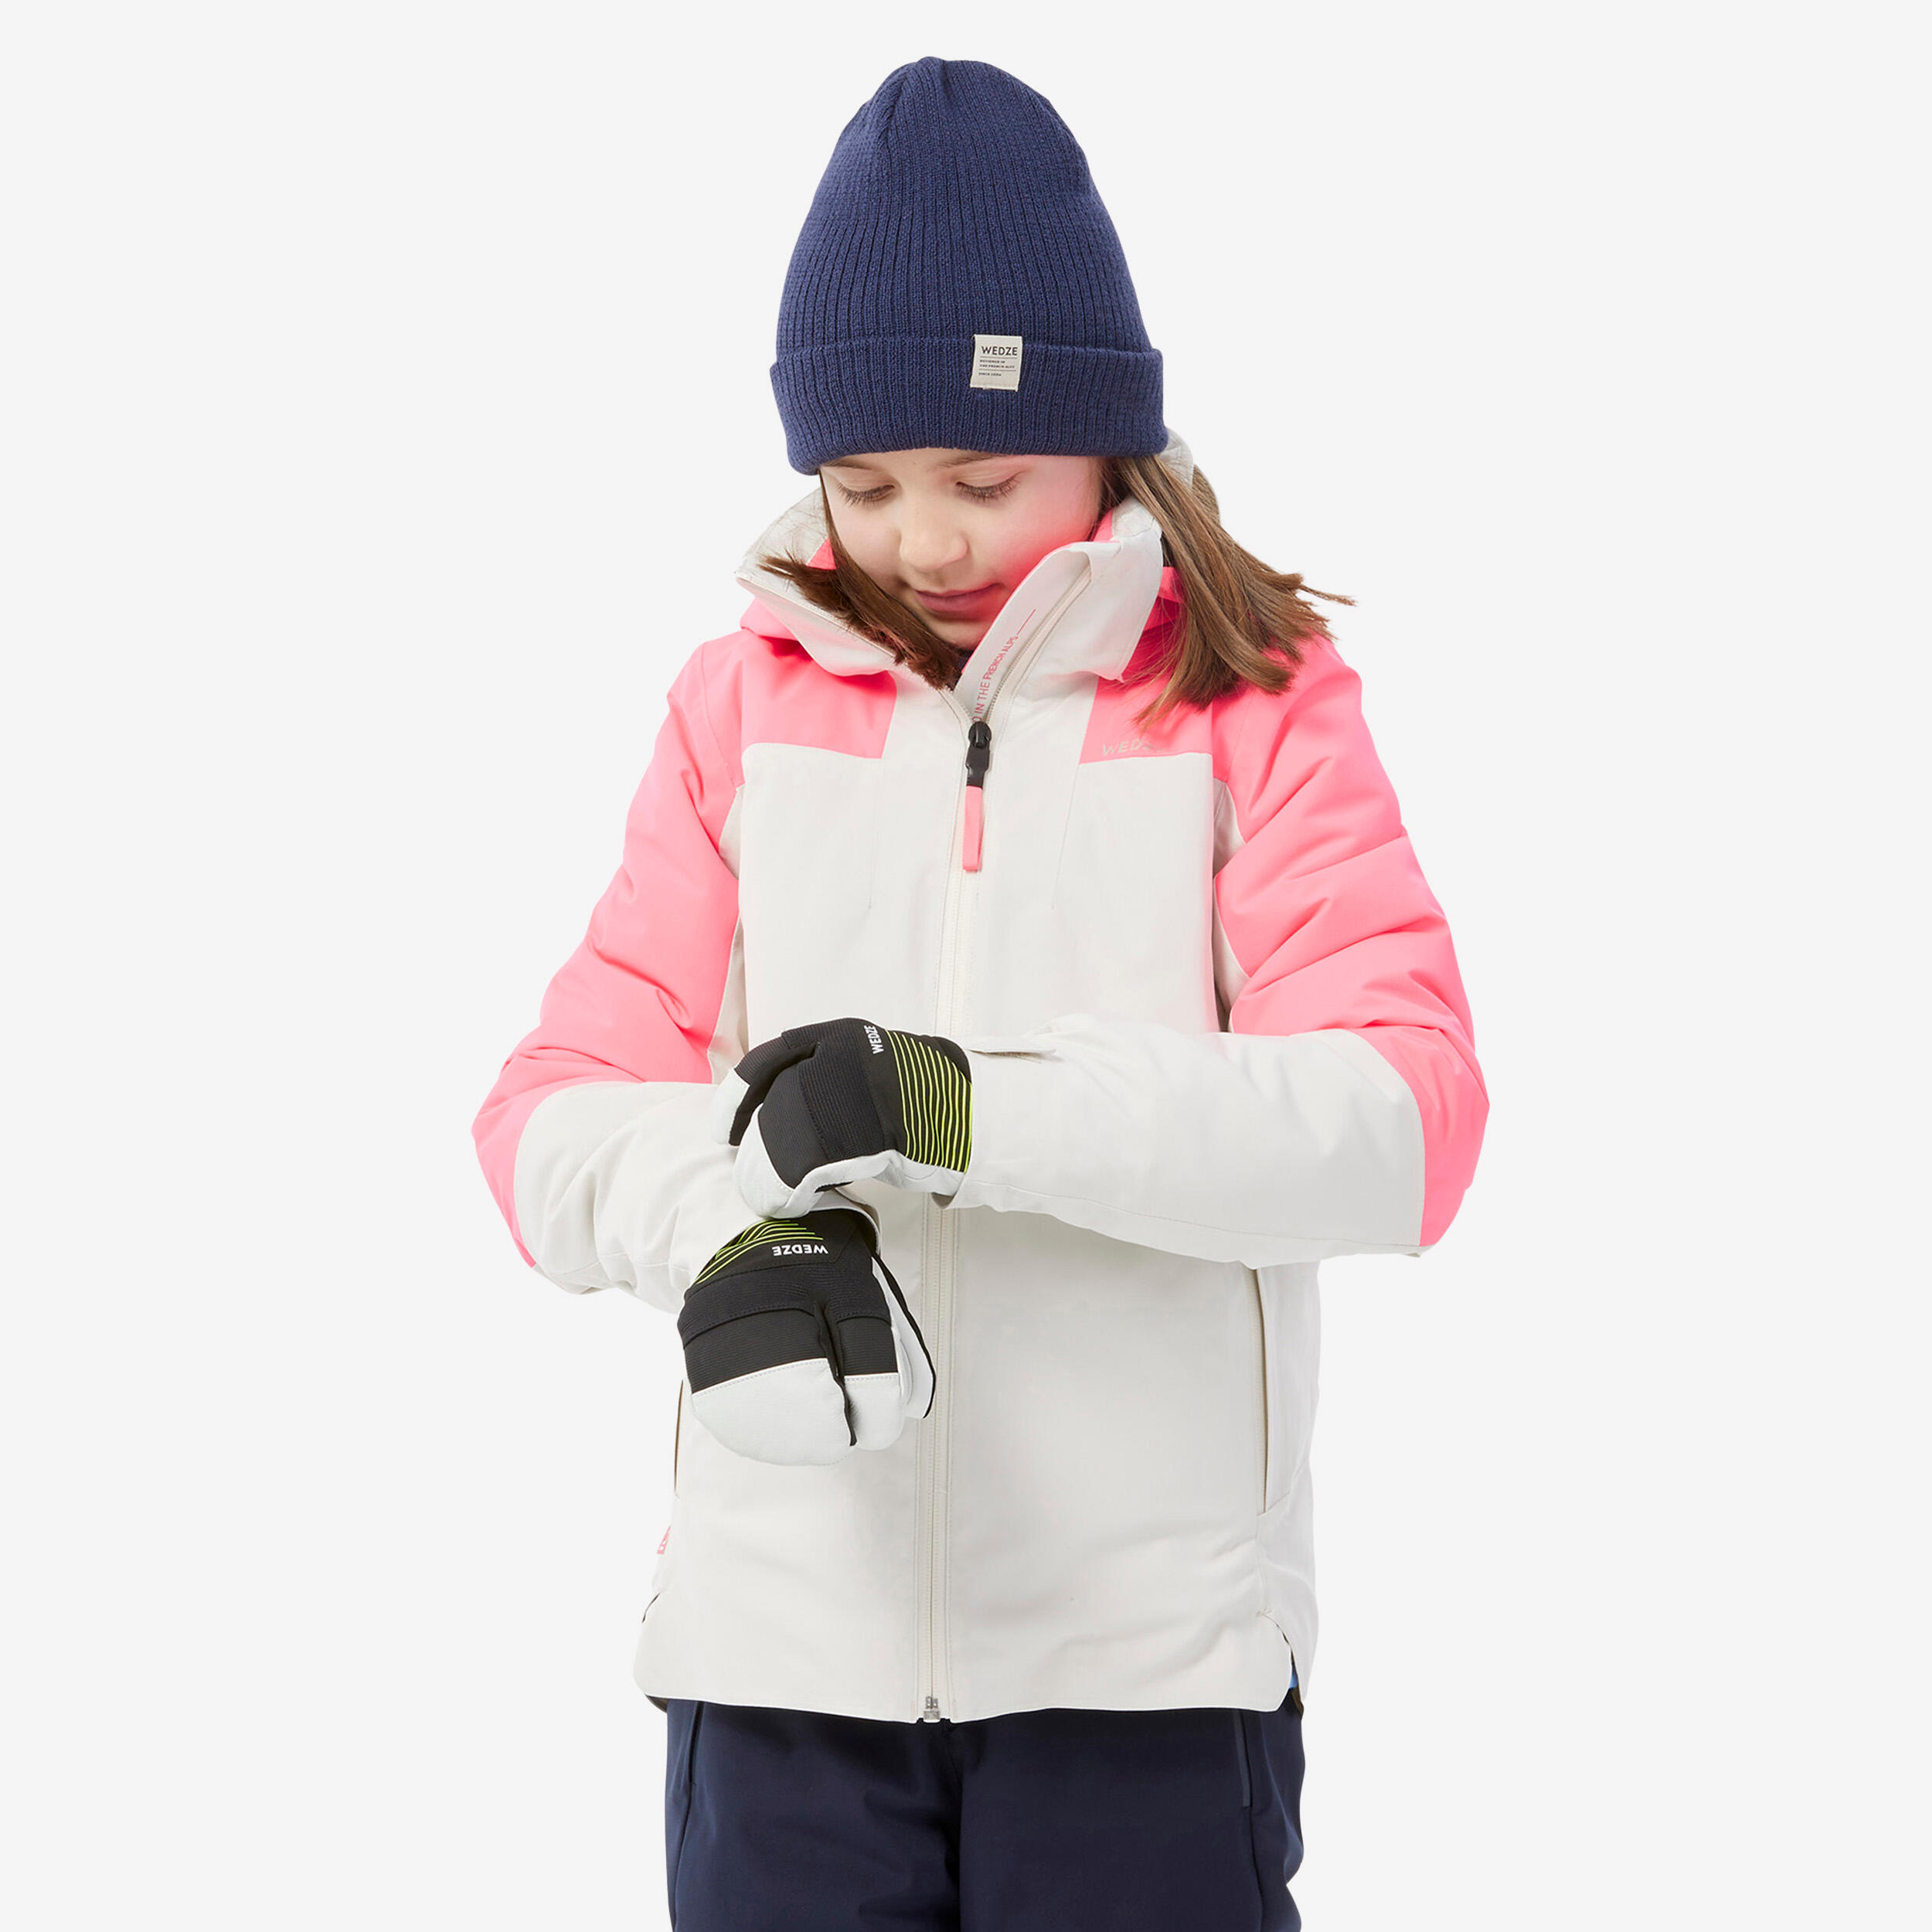 Kids’ warm and waterproof ski jacket 900 - White and pink 1/12